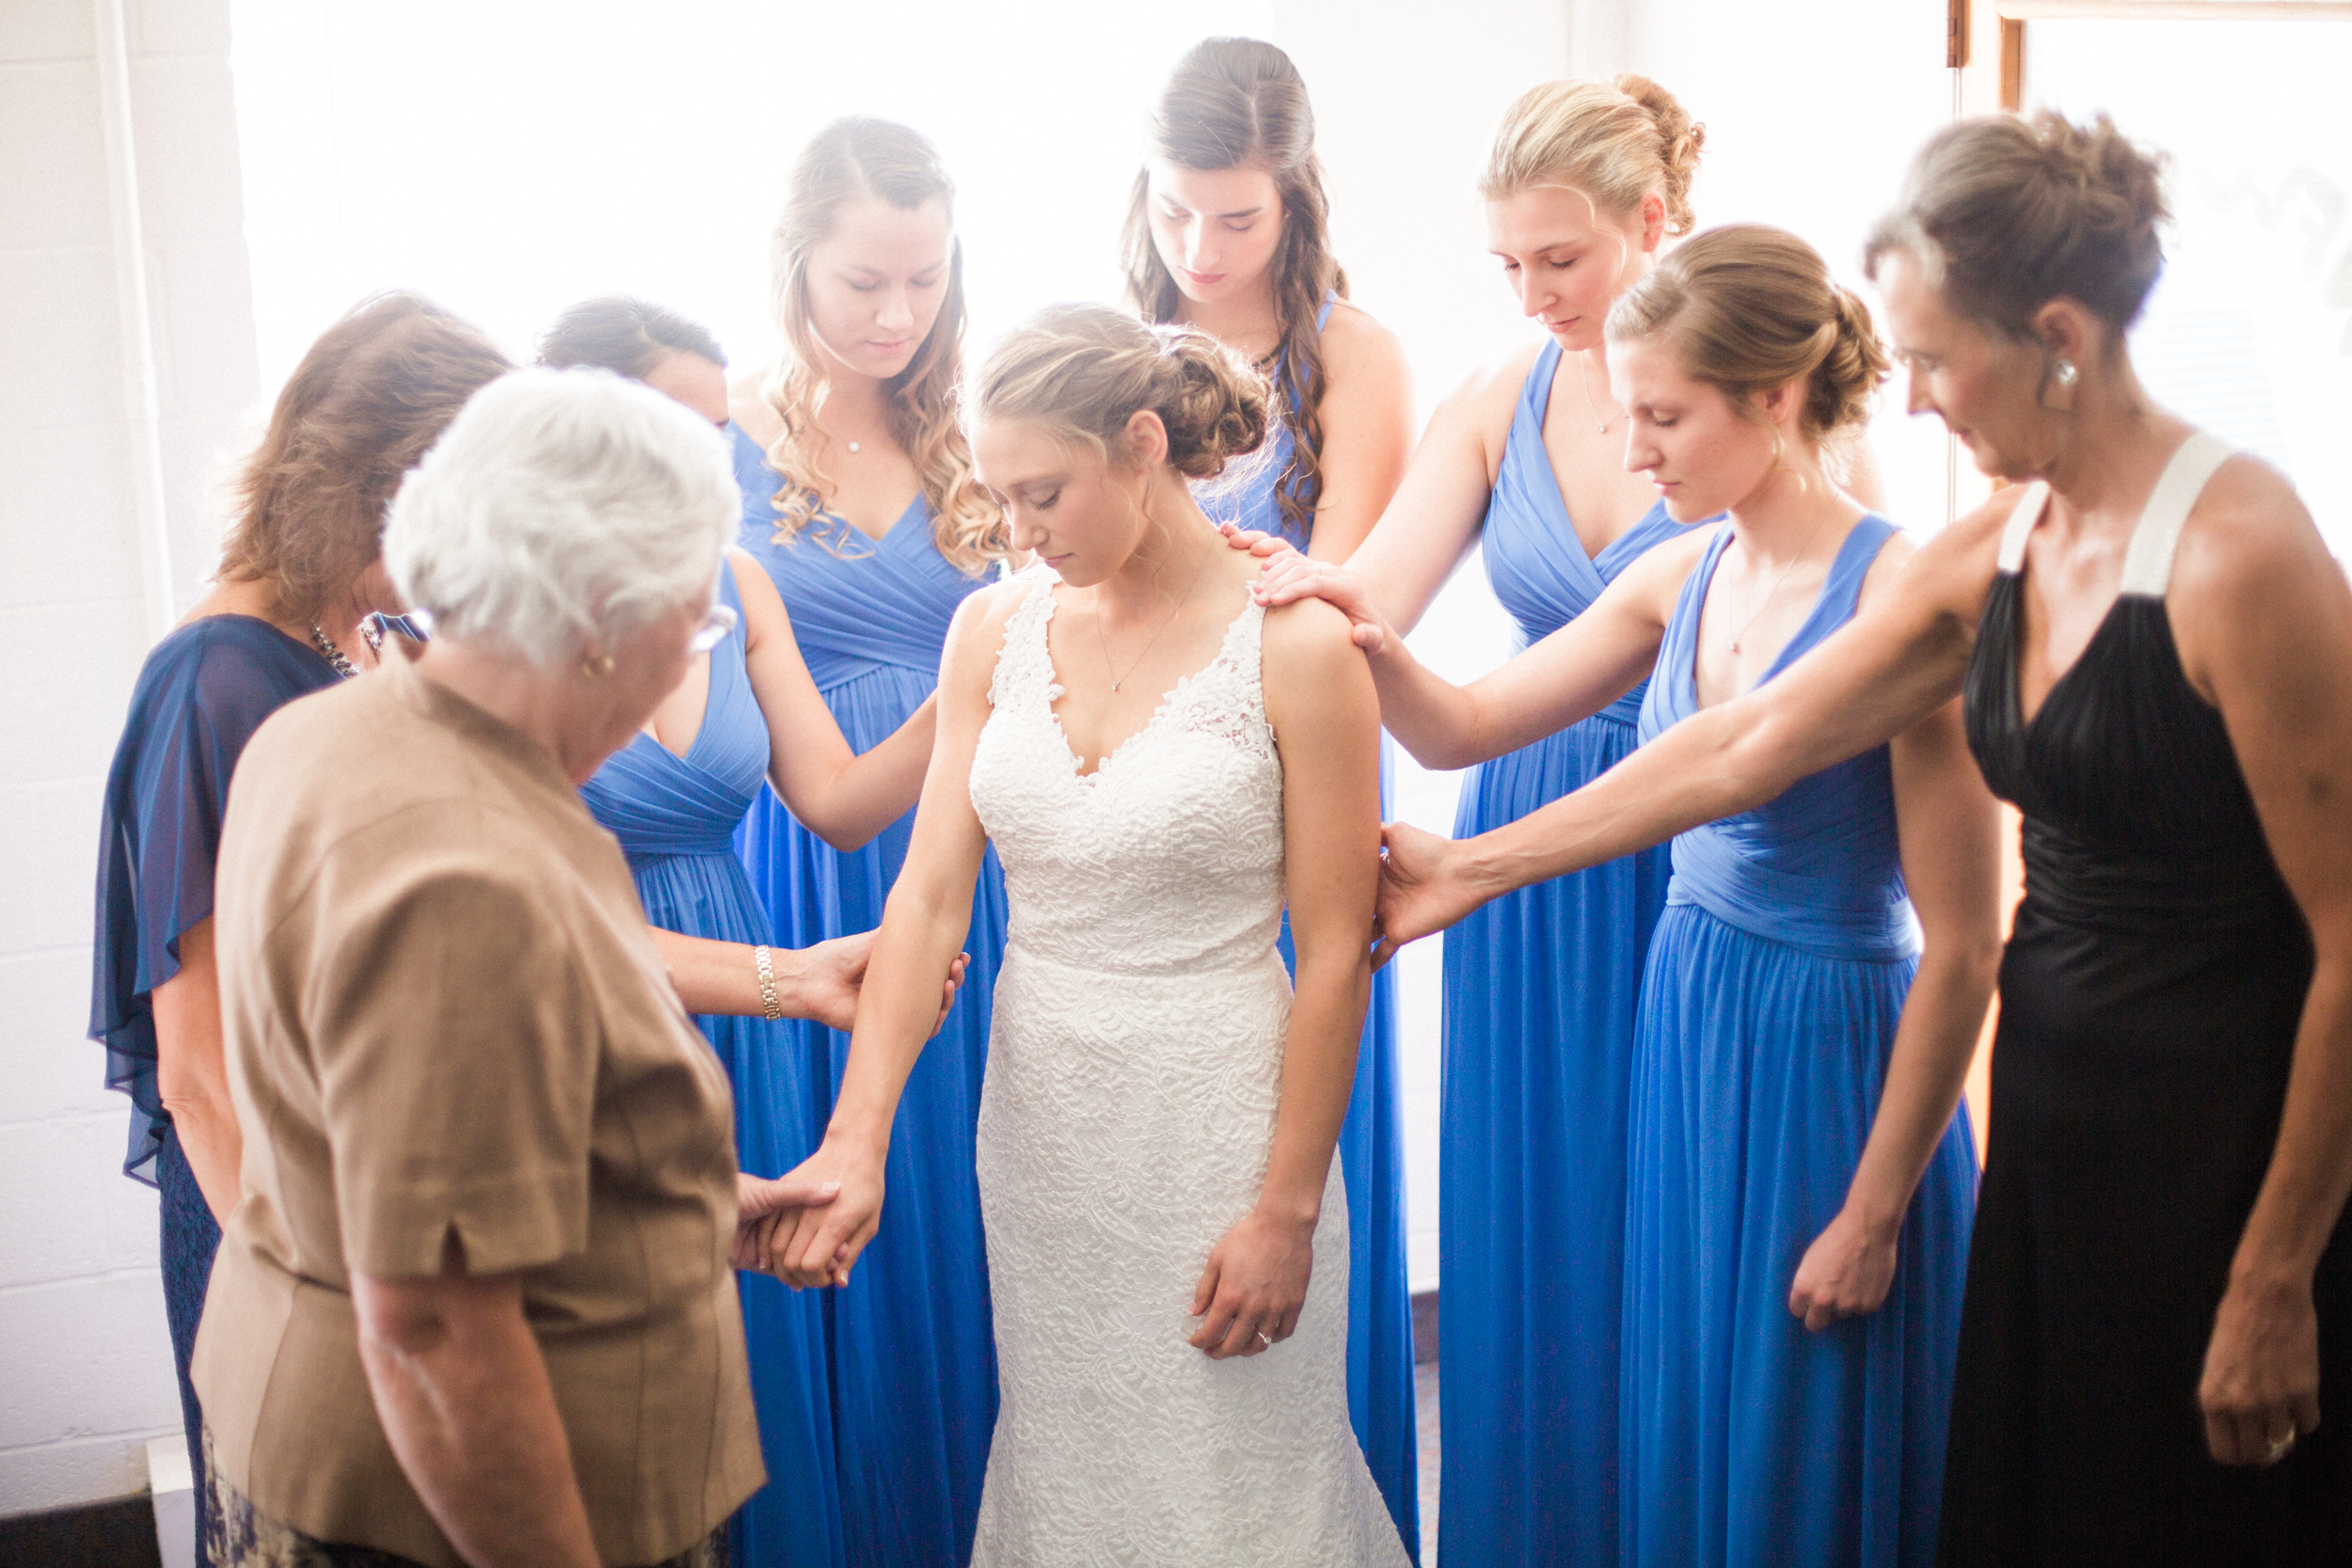 prayer circle around bride before wedding